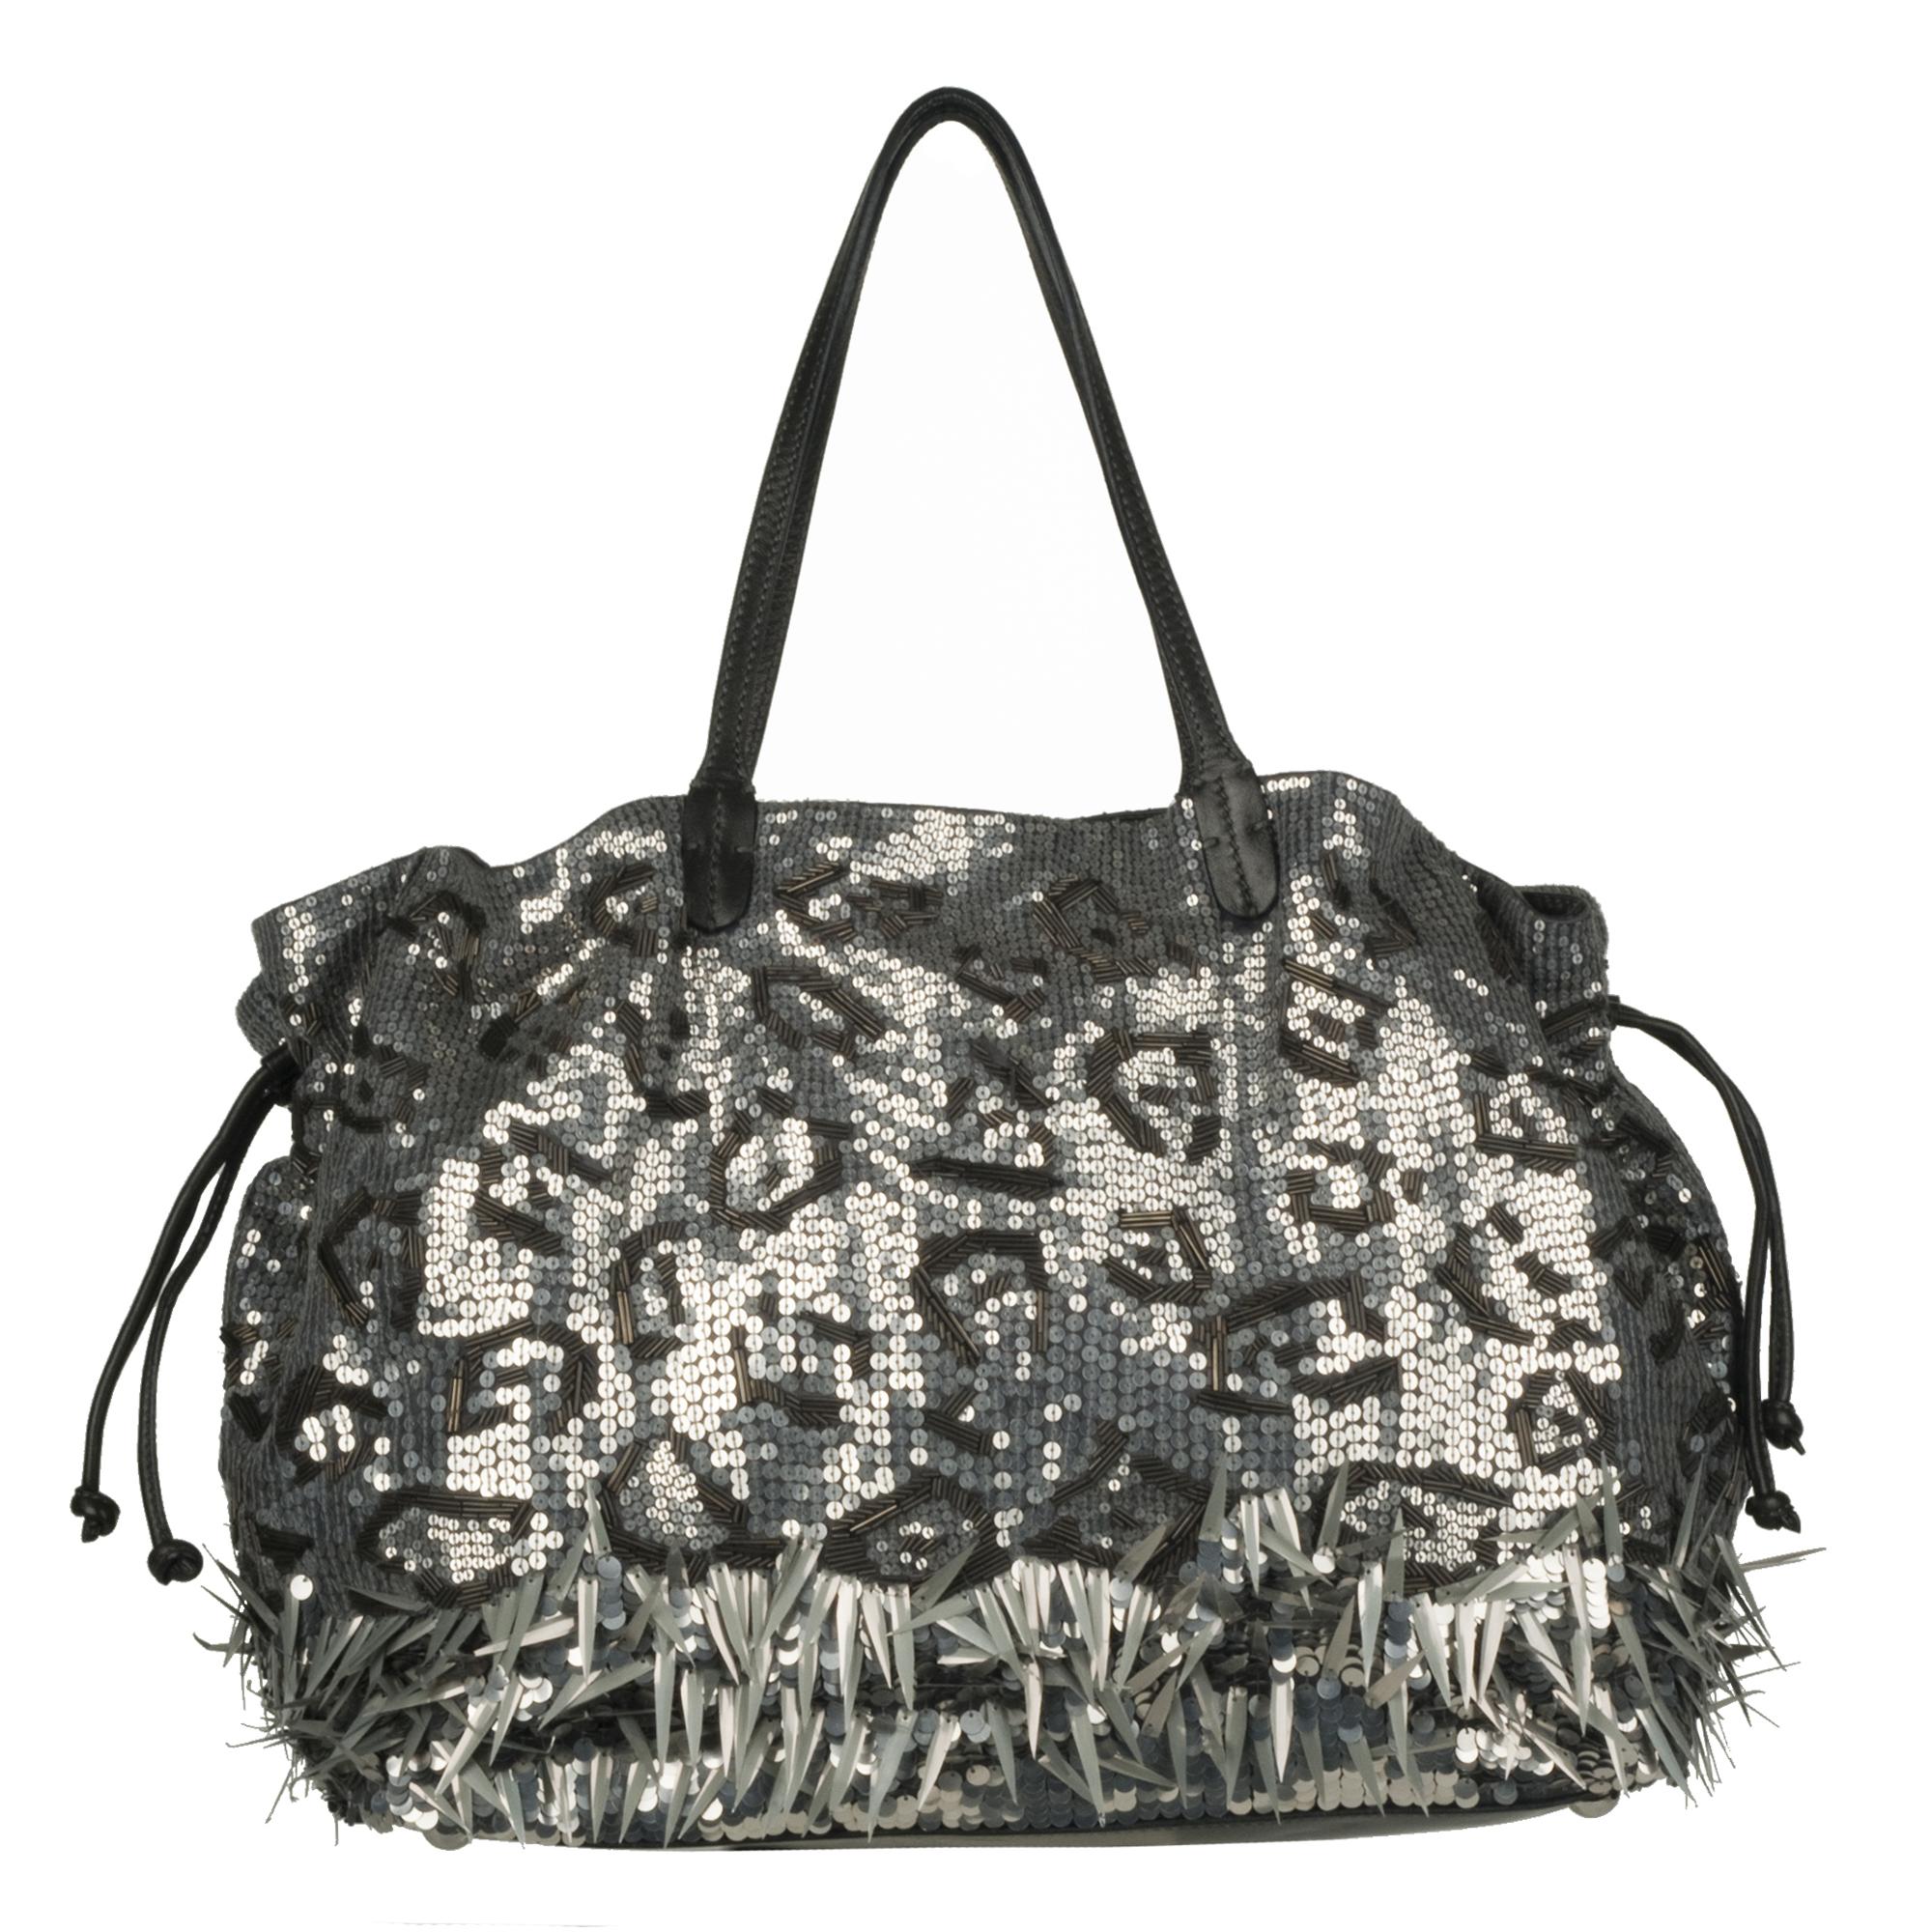 ... - Overstock Shopping - Big Discounts on Valentino Designer Handbags